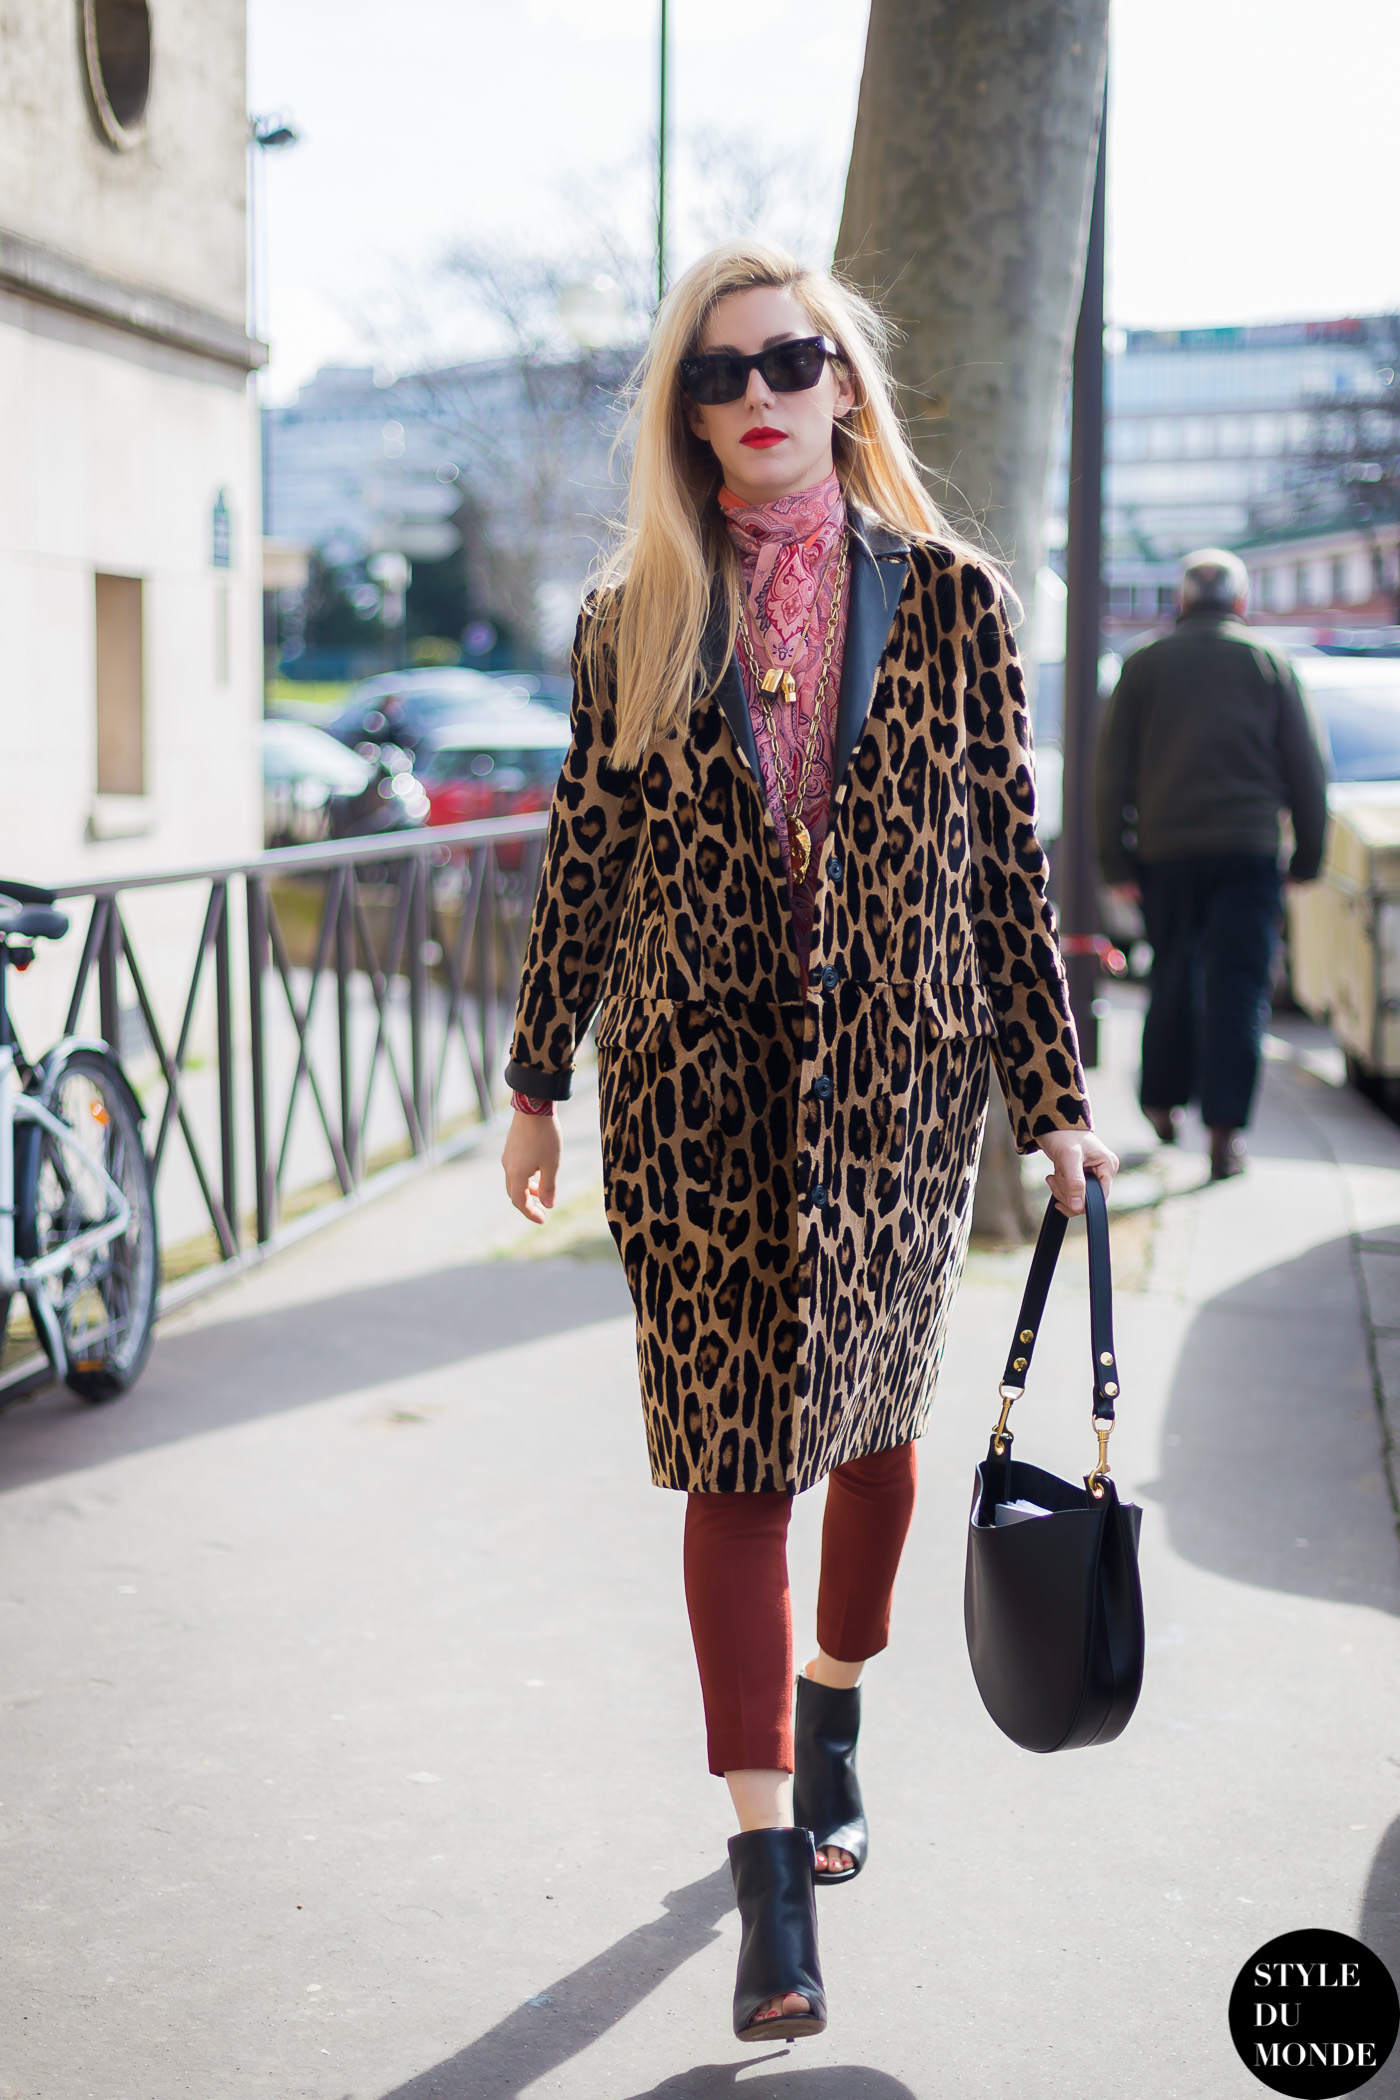 Paris Fashion Week FW 2014 Street Style: Joanna Hillman - STYLE DU ...